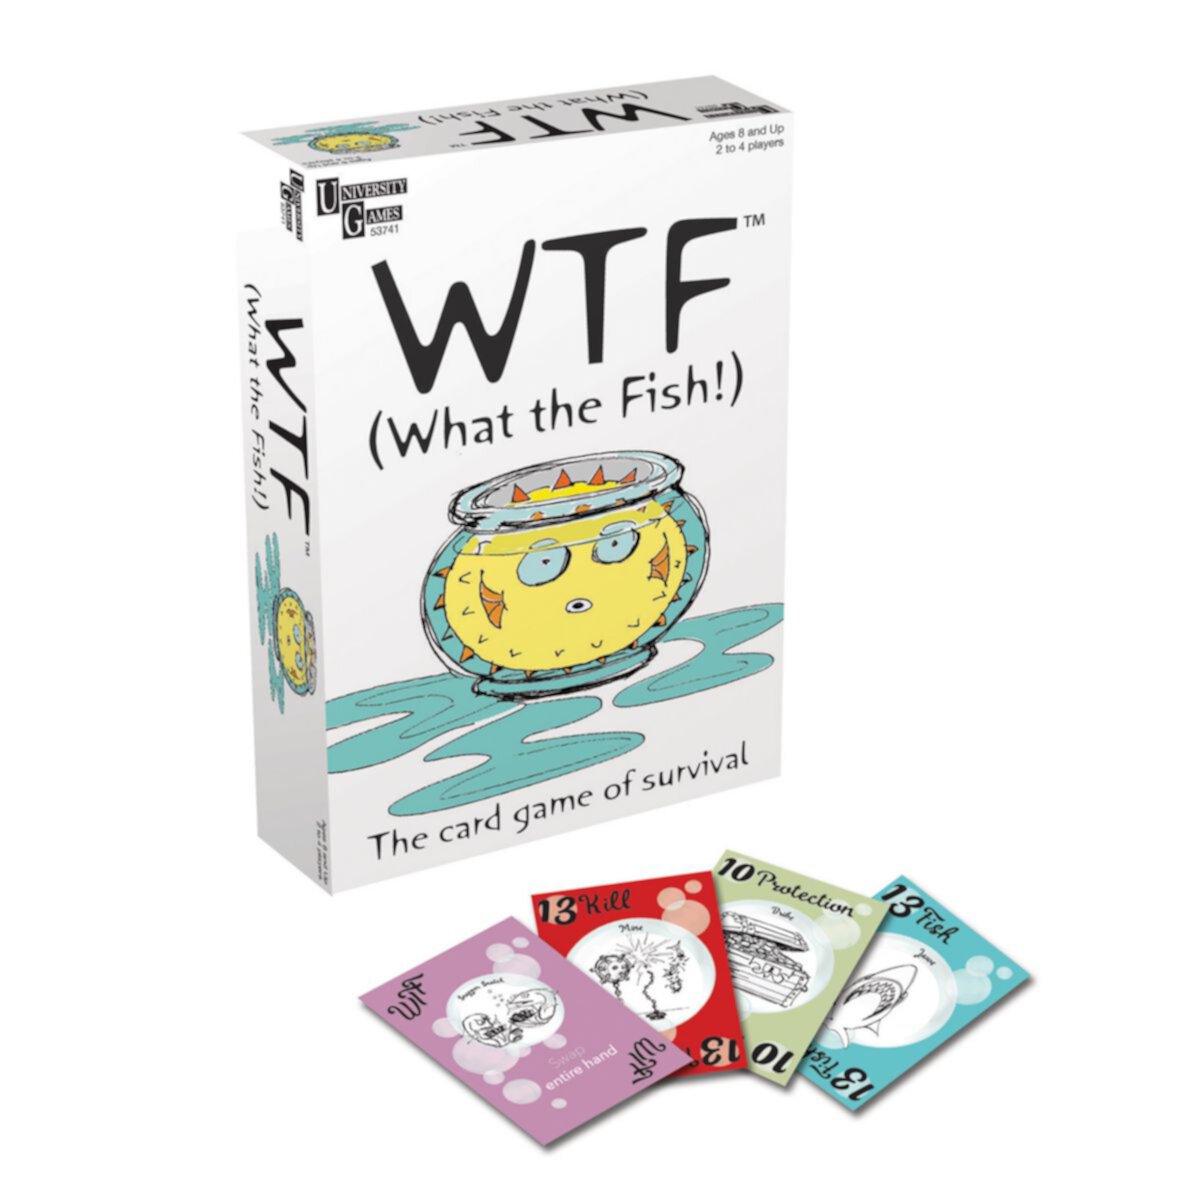 Игра WTF (What the Fish!) От University Games University Games